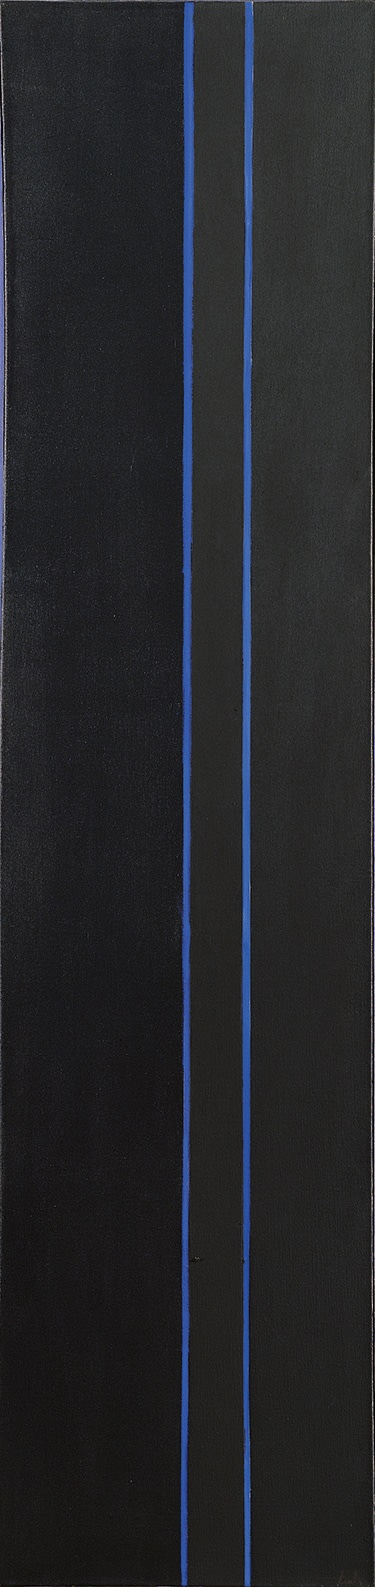 Barnett Newman By Twos, 1949